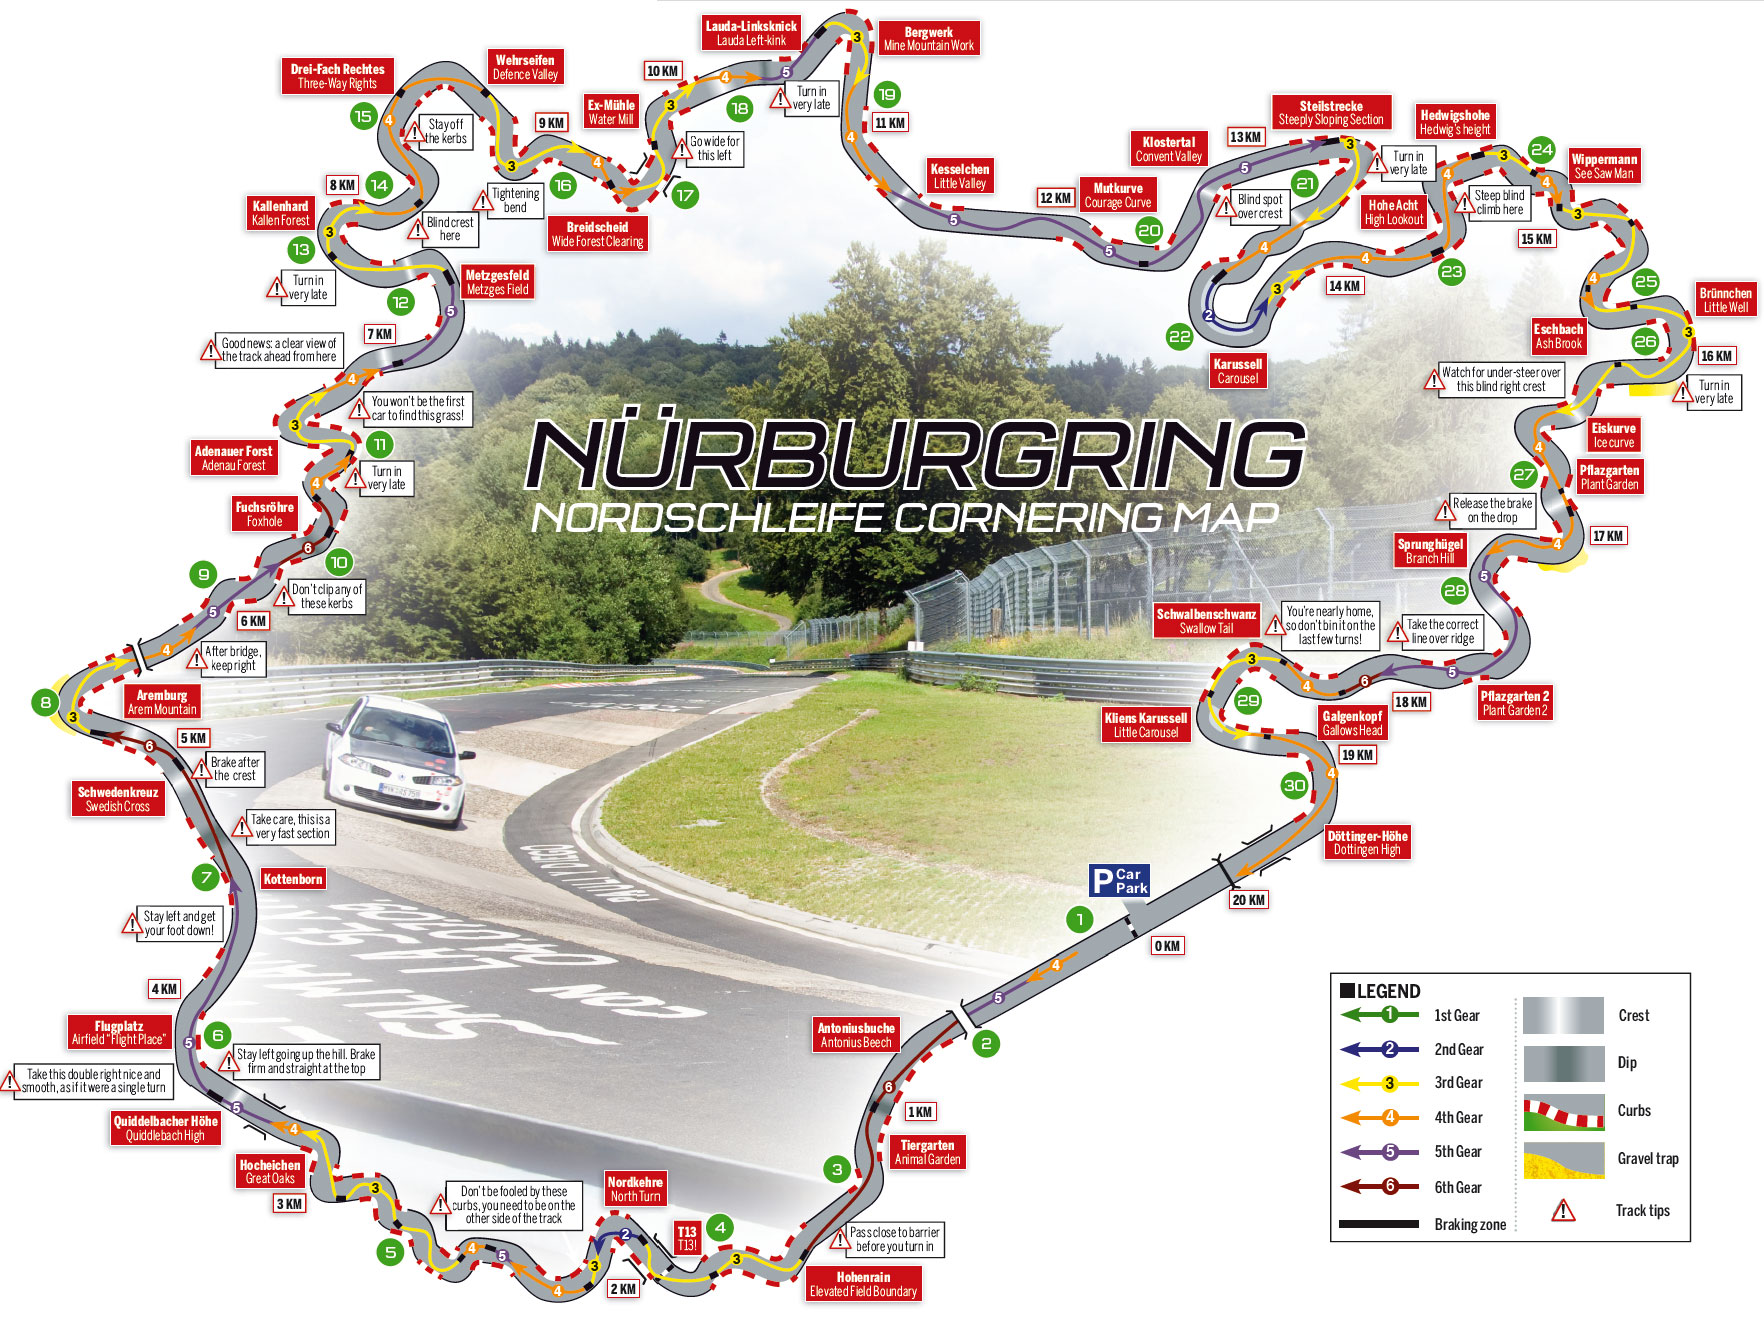 nurburgring-cornering-map-guide-download.jpg